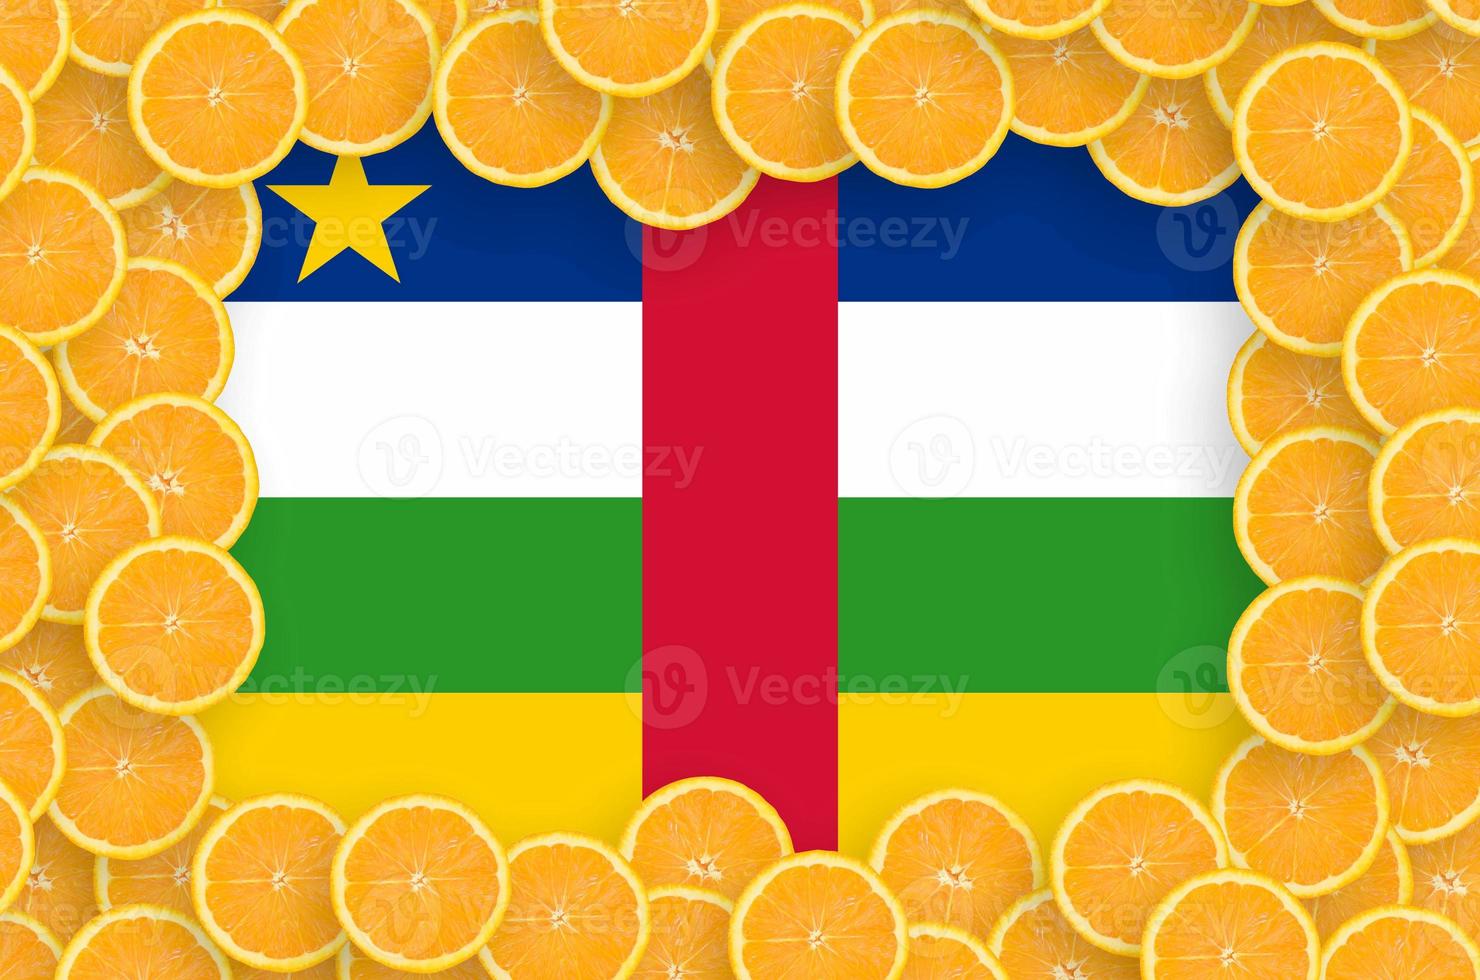 centraal Afrikaanse republiek vlag in vers citrus fruit plakjes kader foto